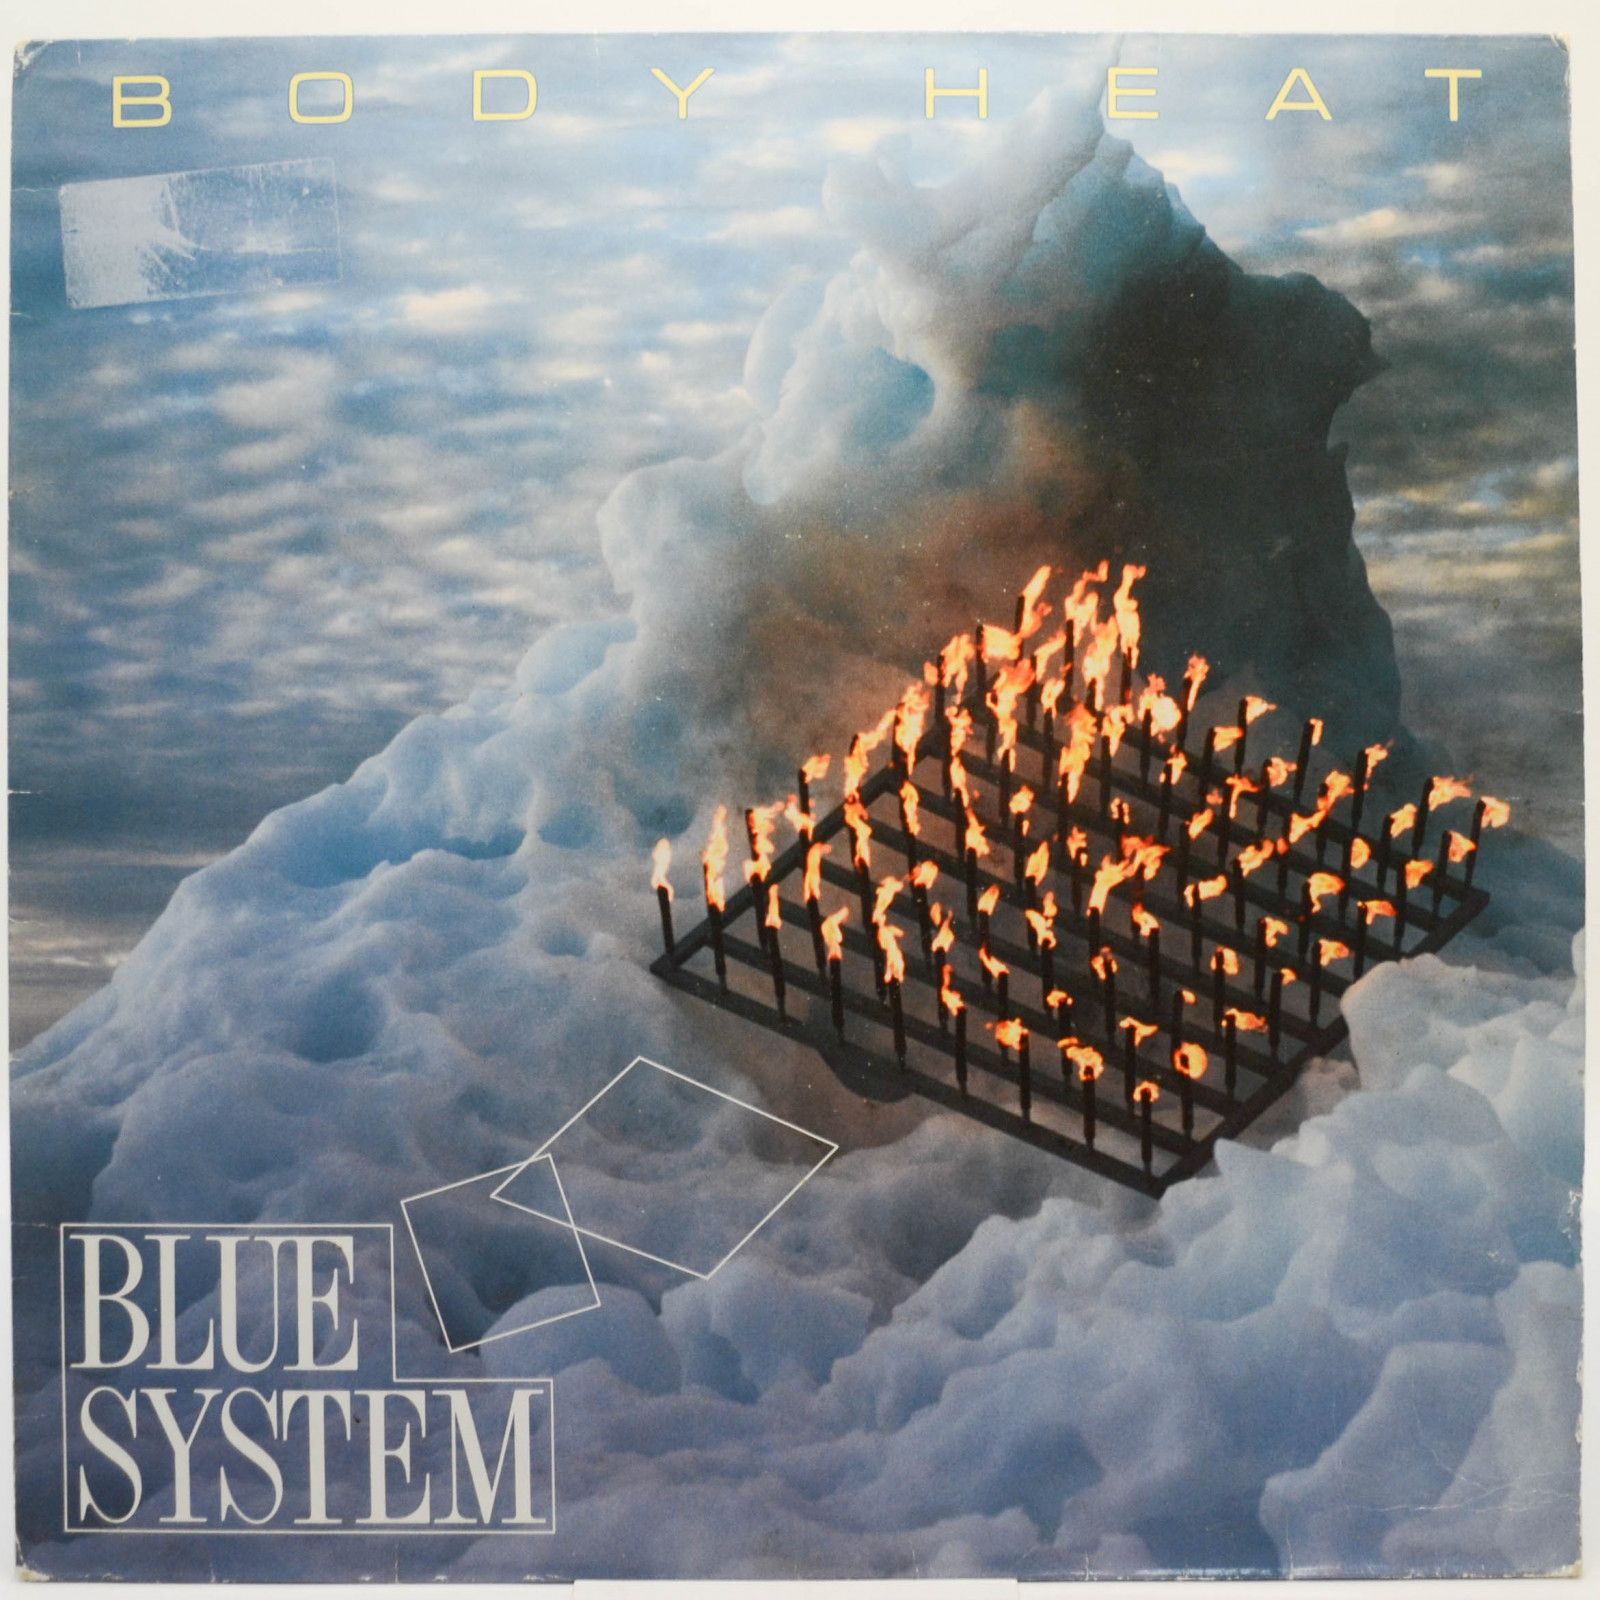 Blue System — Body Heat, 1988